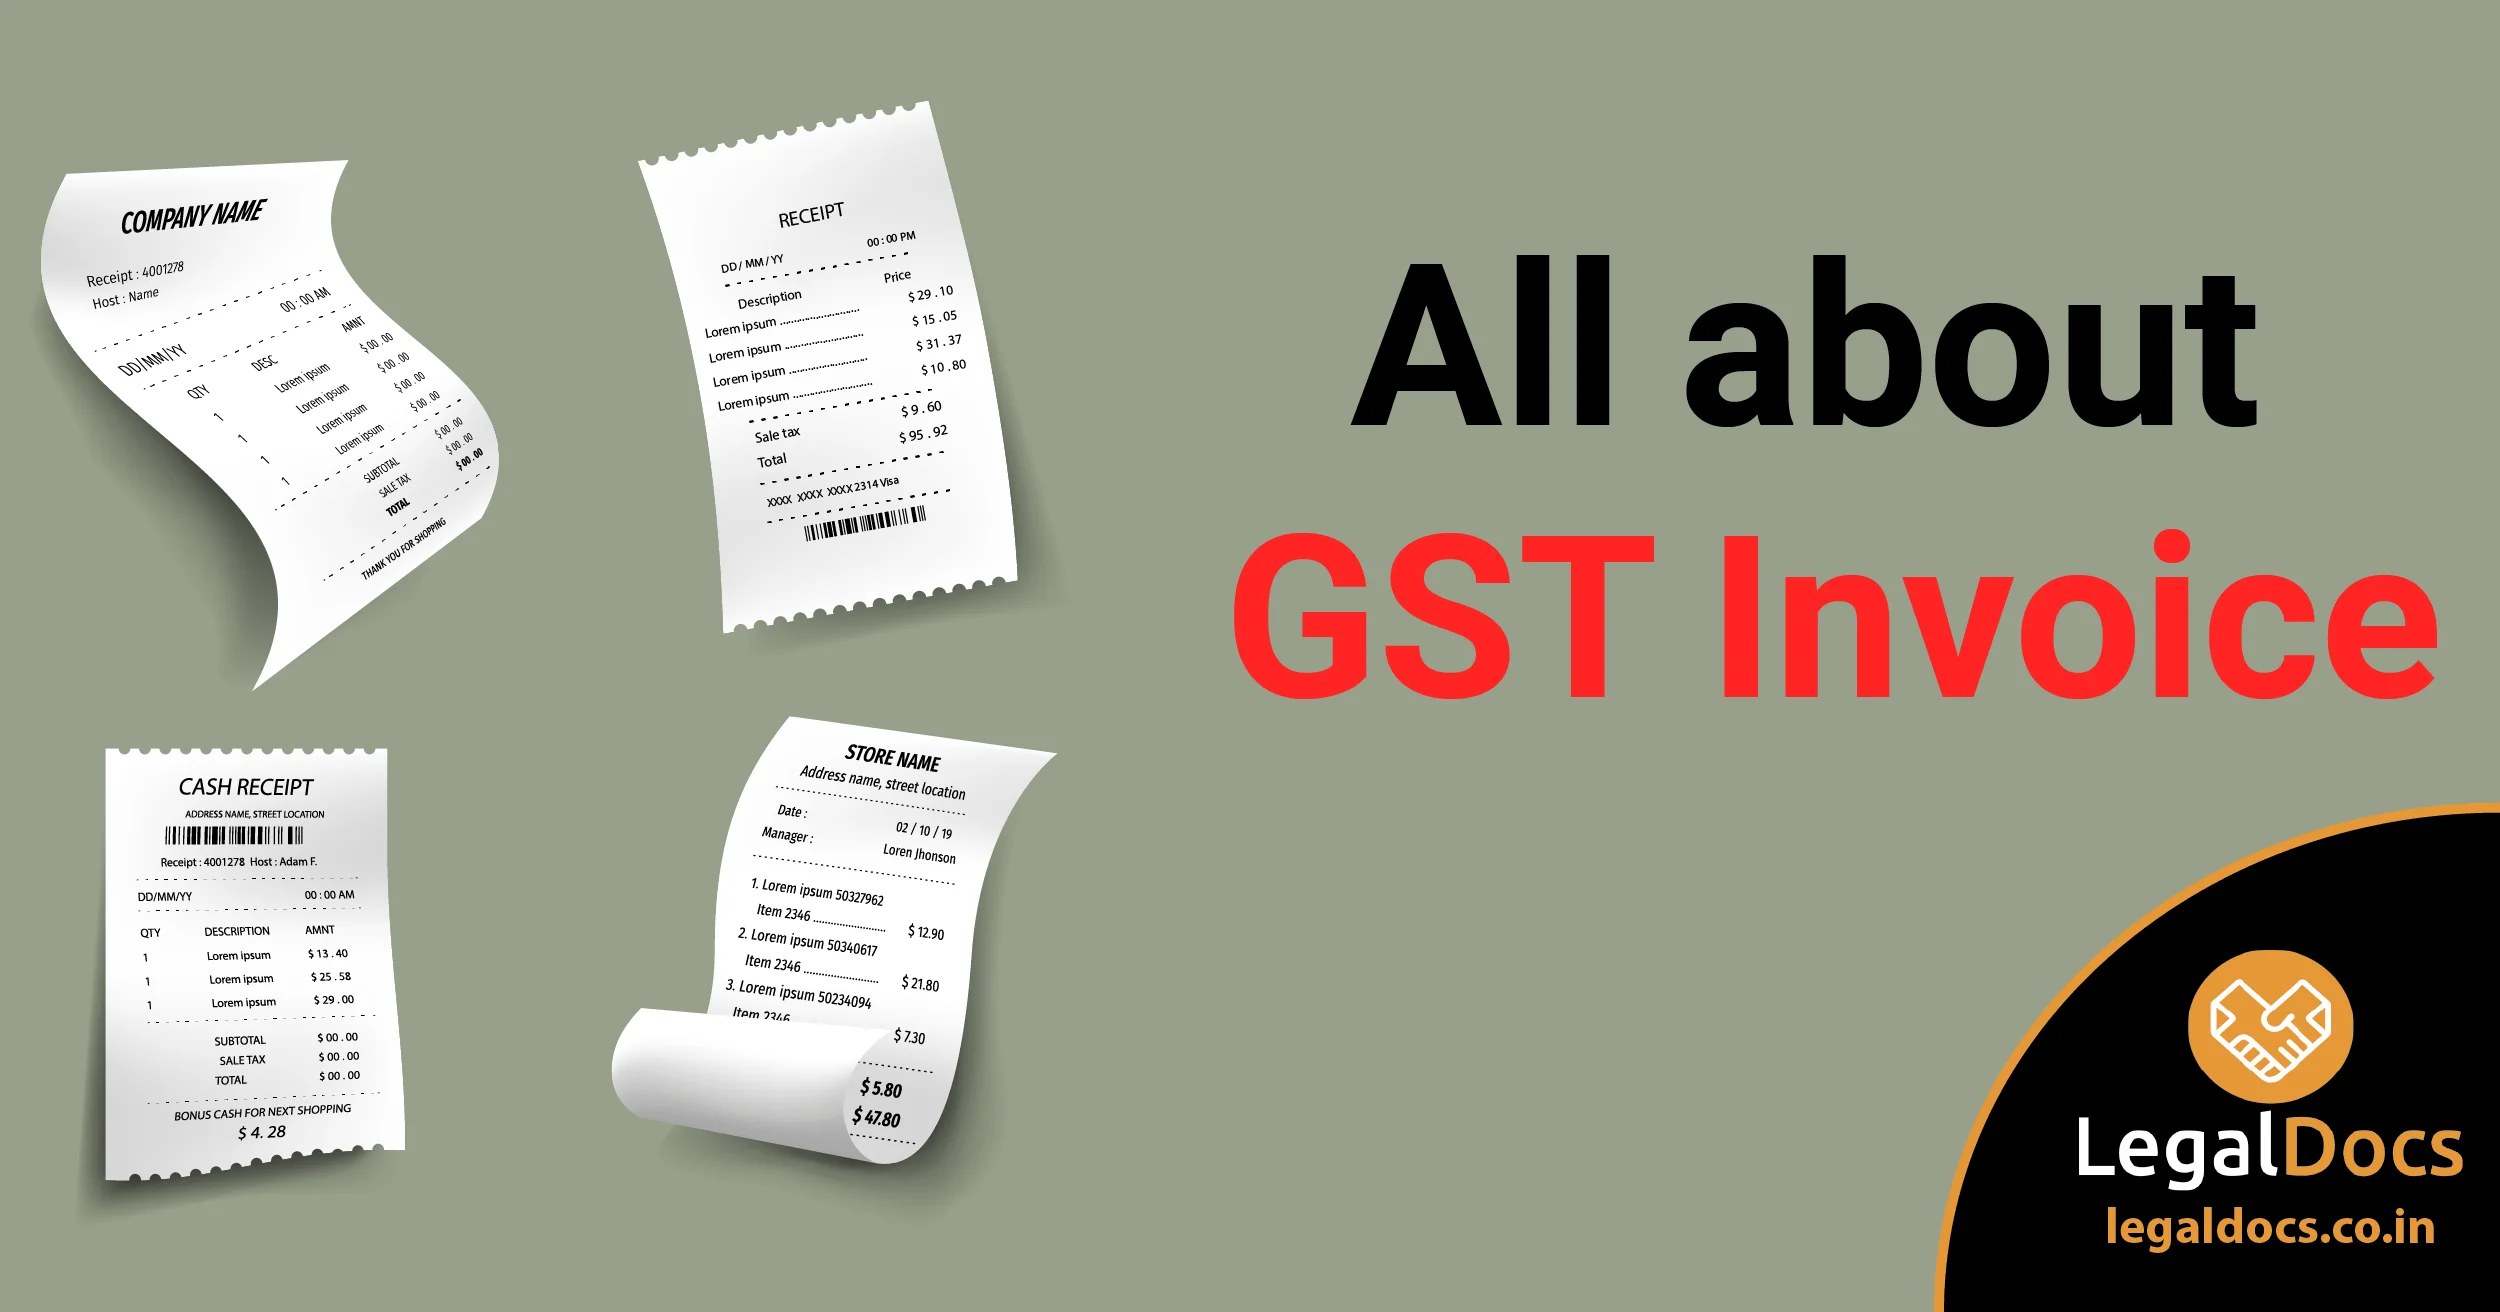 GST Invoice - All about GST Invoices - LegalDocs